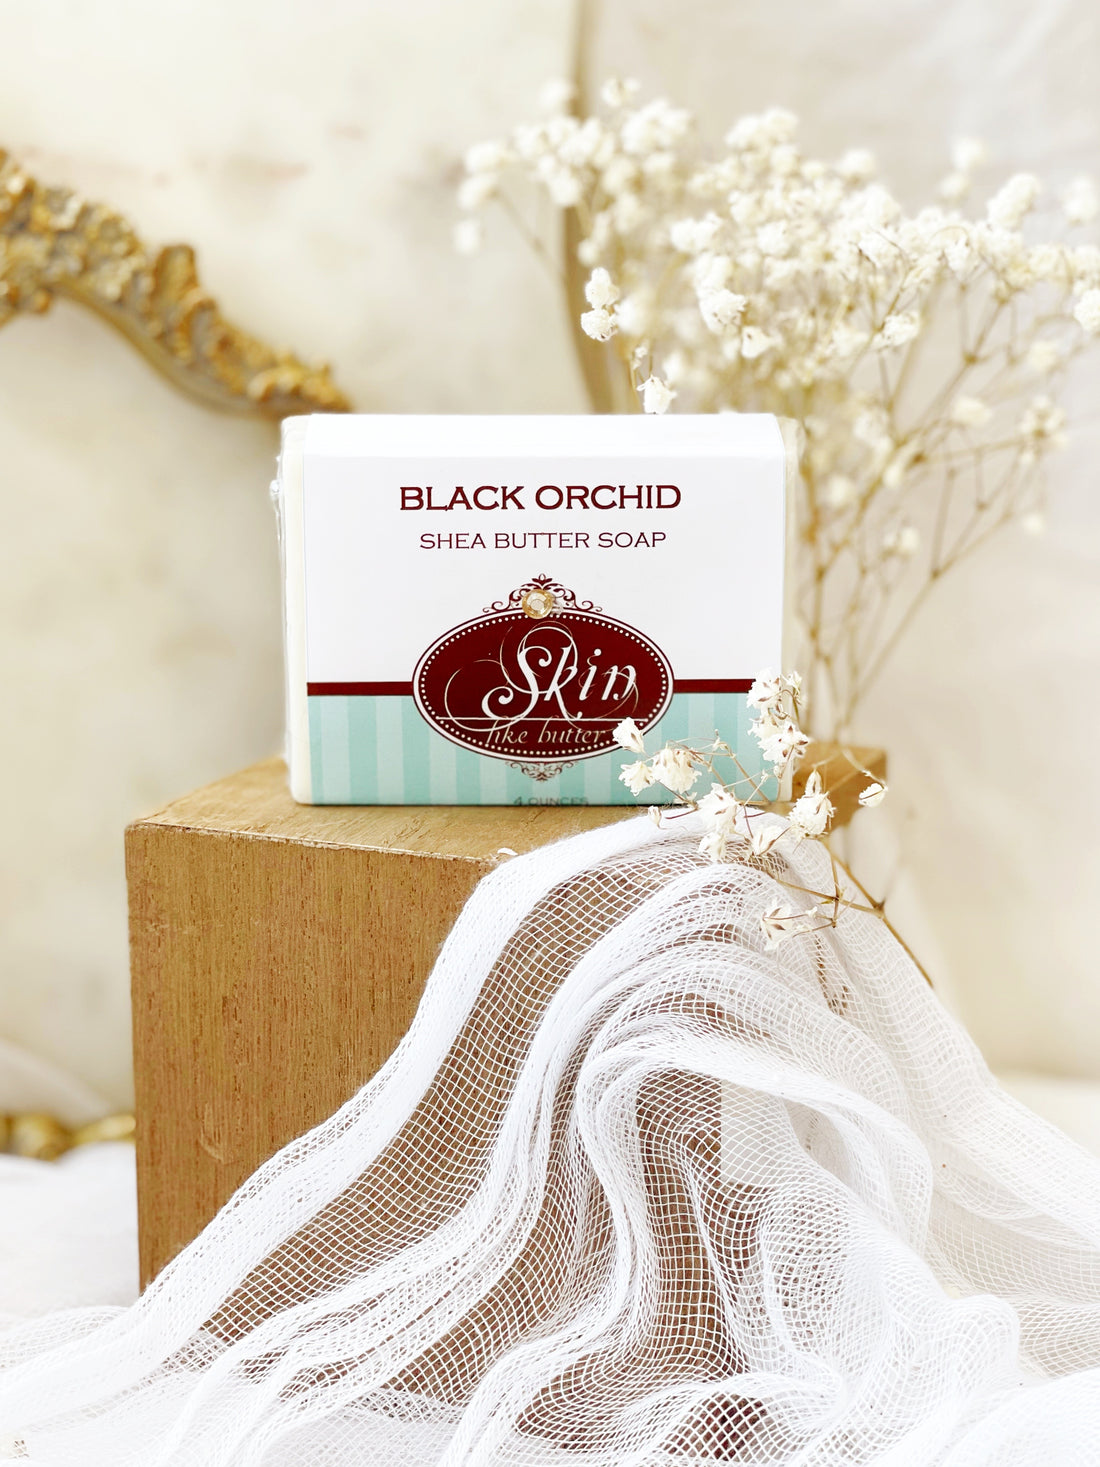 BLACK ORCHID - Skin Like Butter - Shea Butter 4 oz Soap Bar